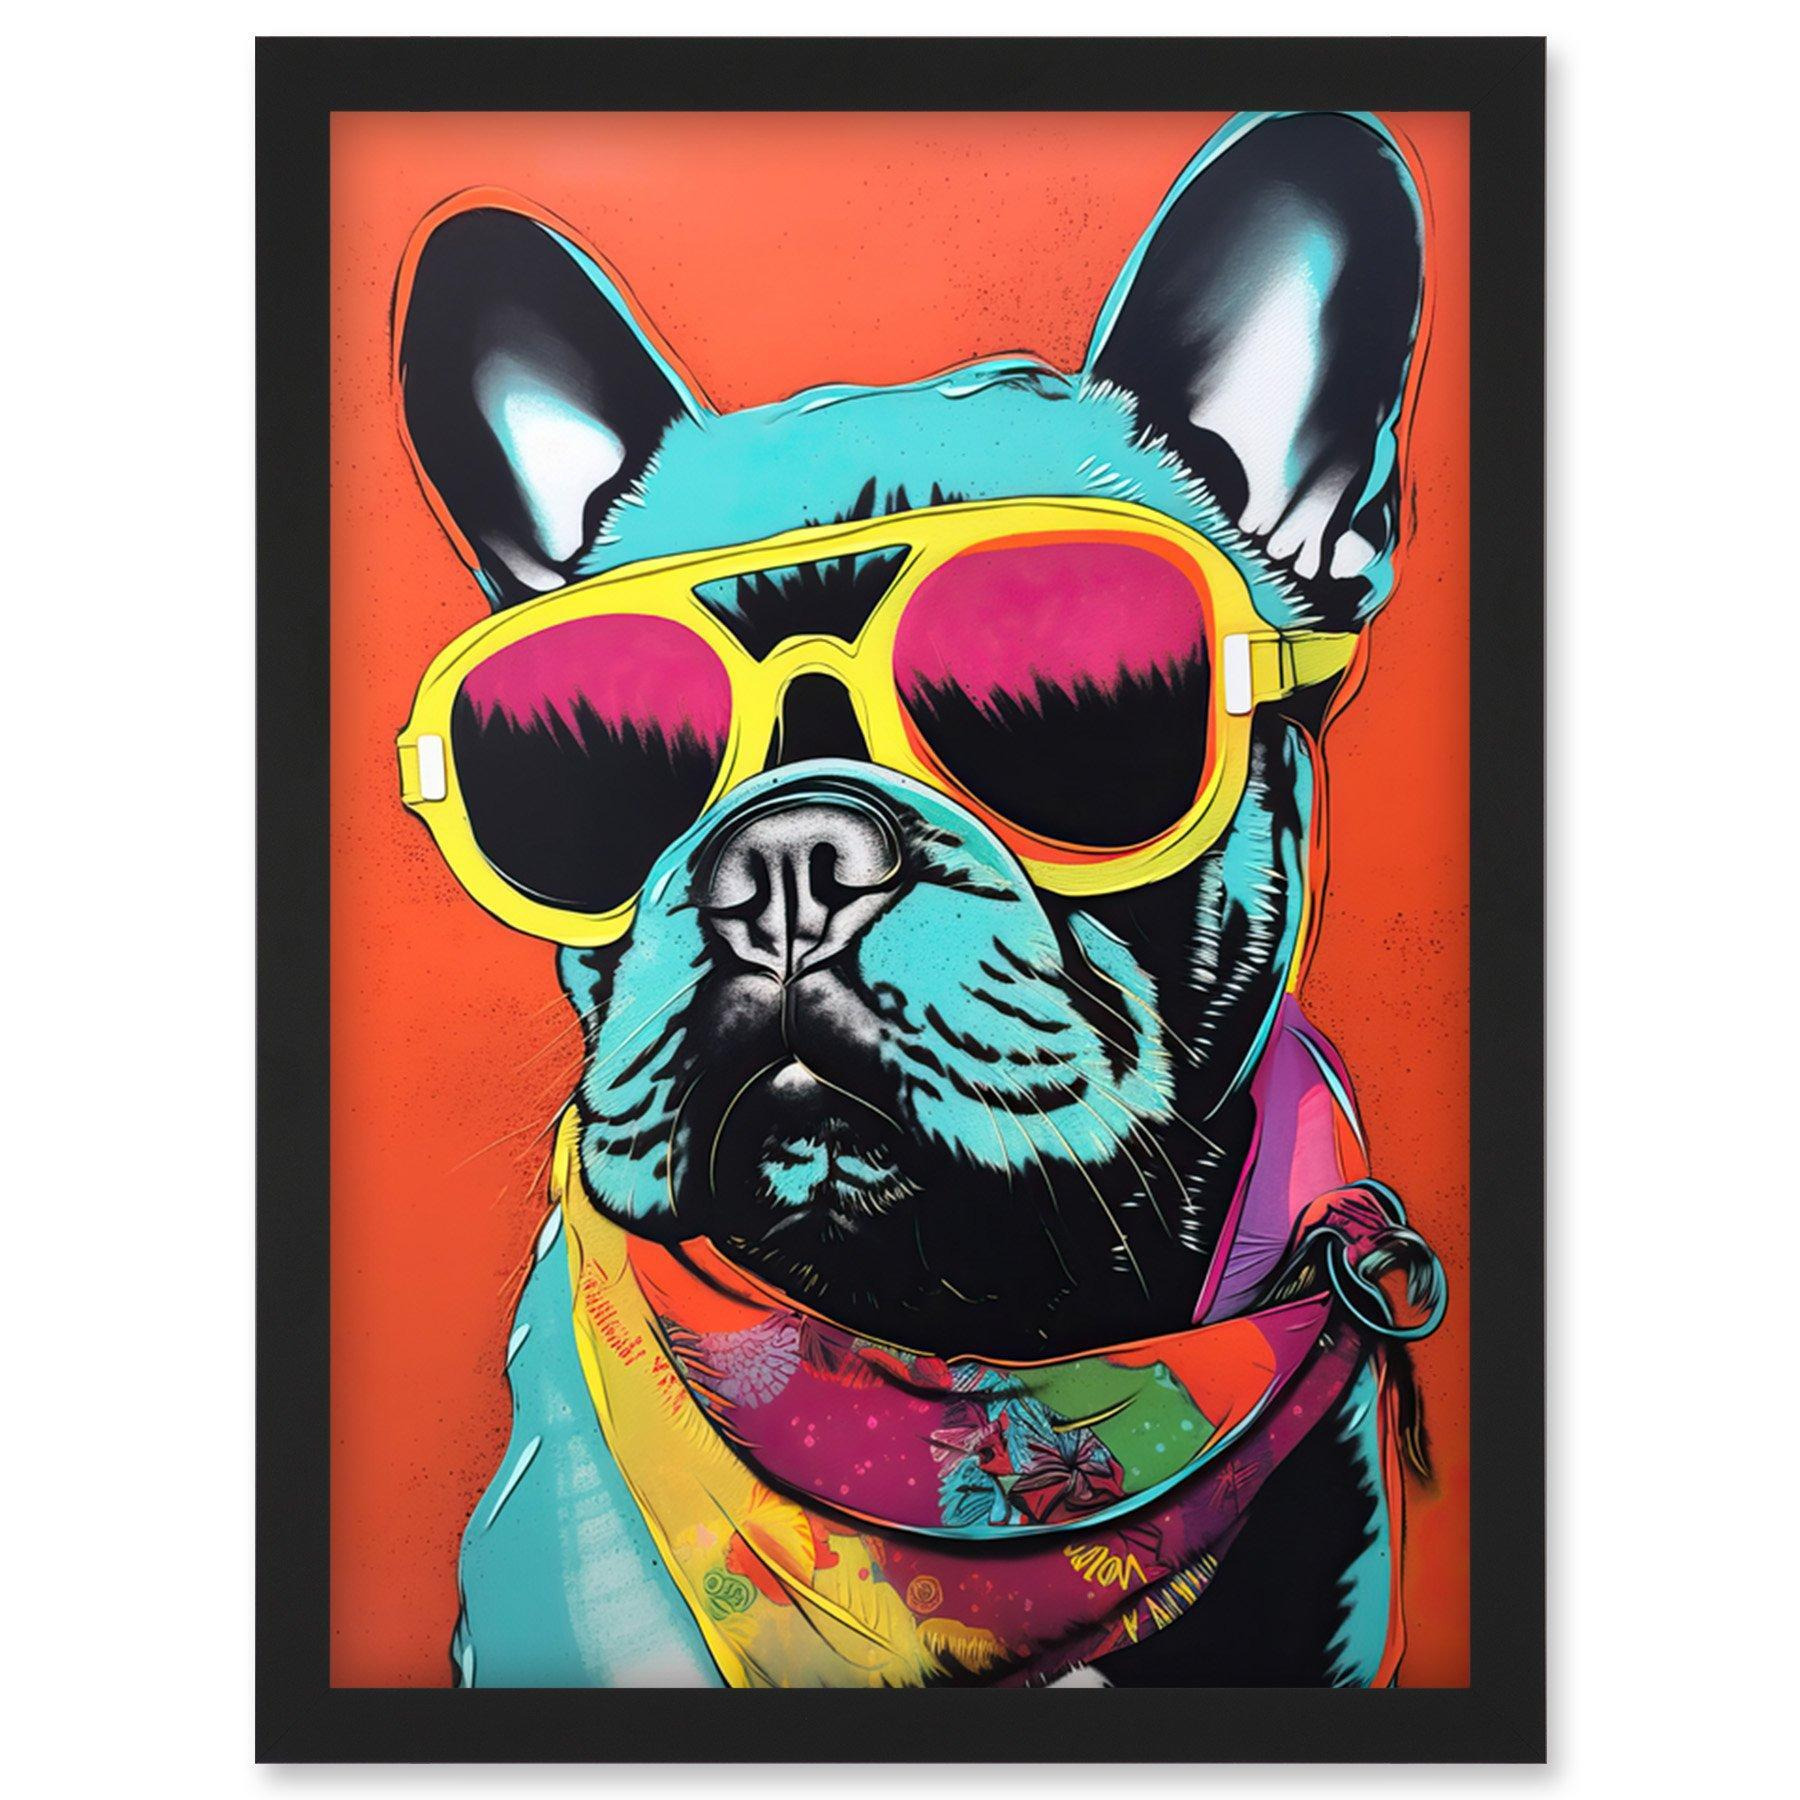 French Bulldog Wearing Sunglasses and Bandana Artwork Framed Wall Art Print A4 - image 1